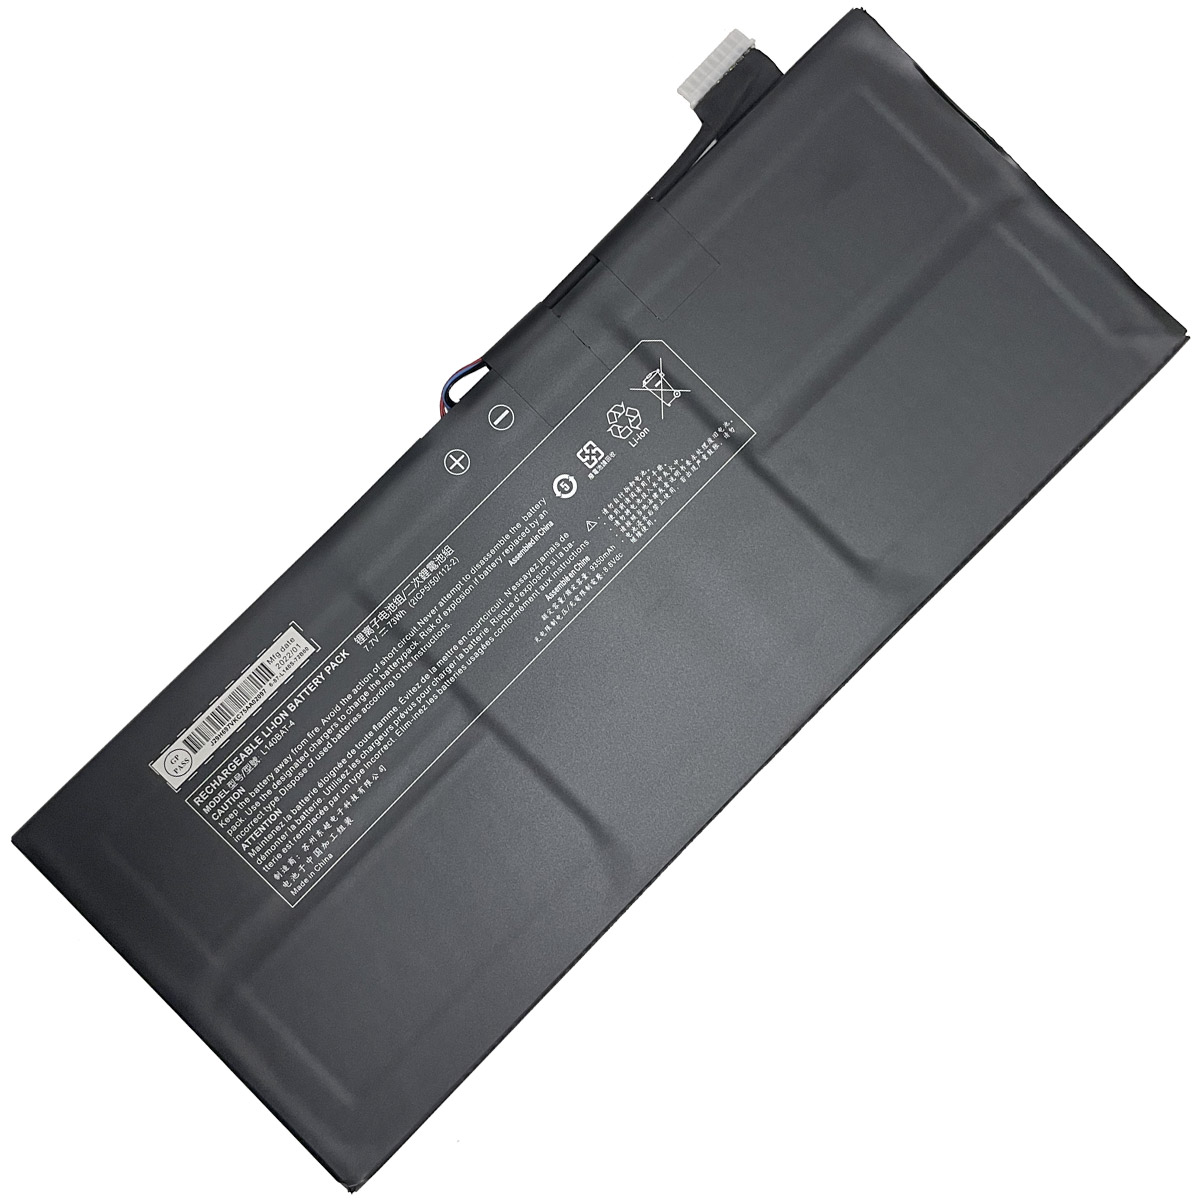 CLEVO-L140BAT-4-Laptop Replacement Battery